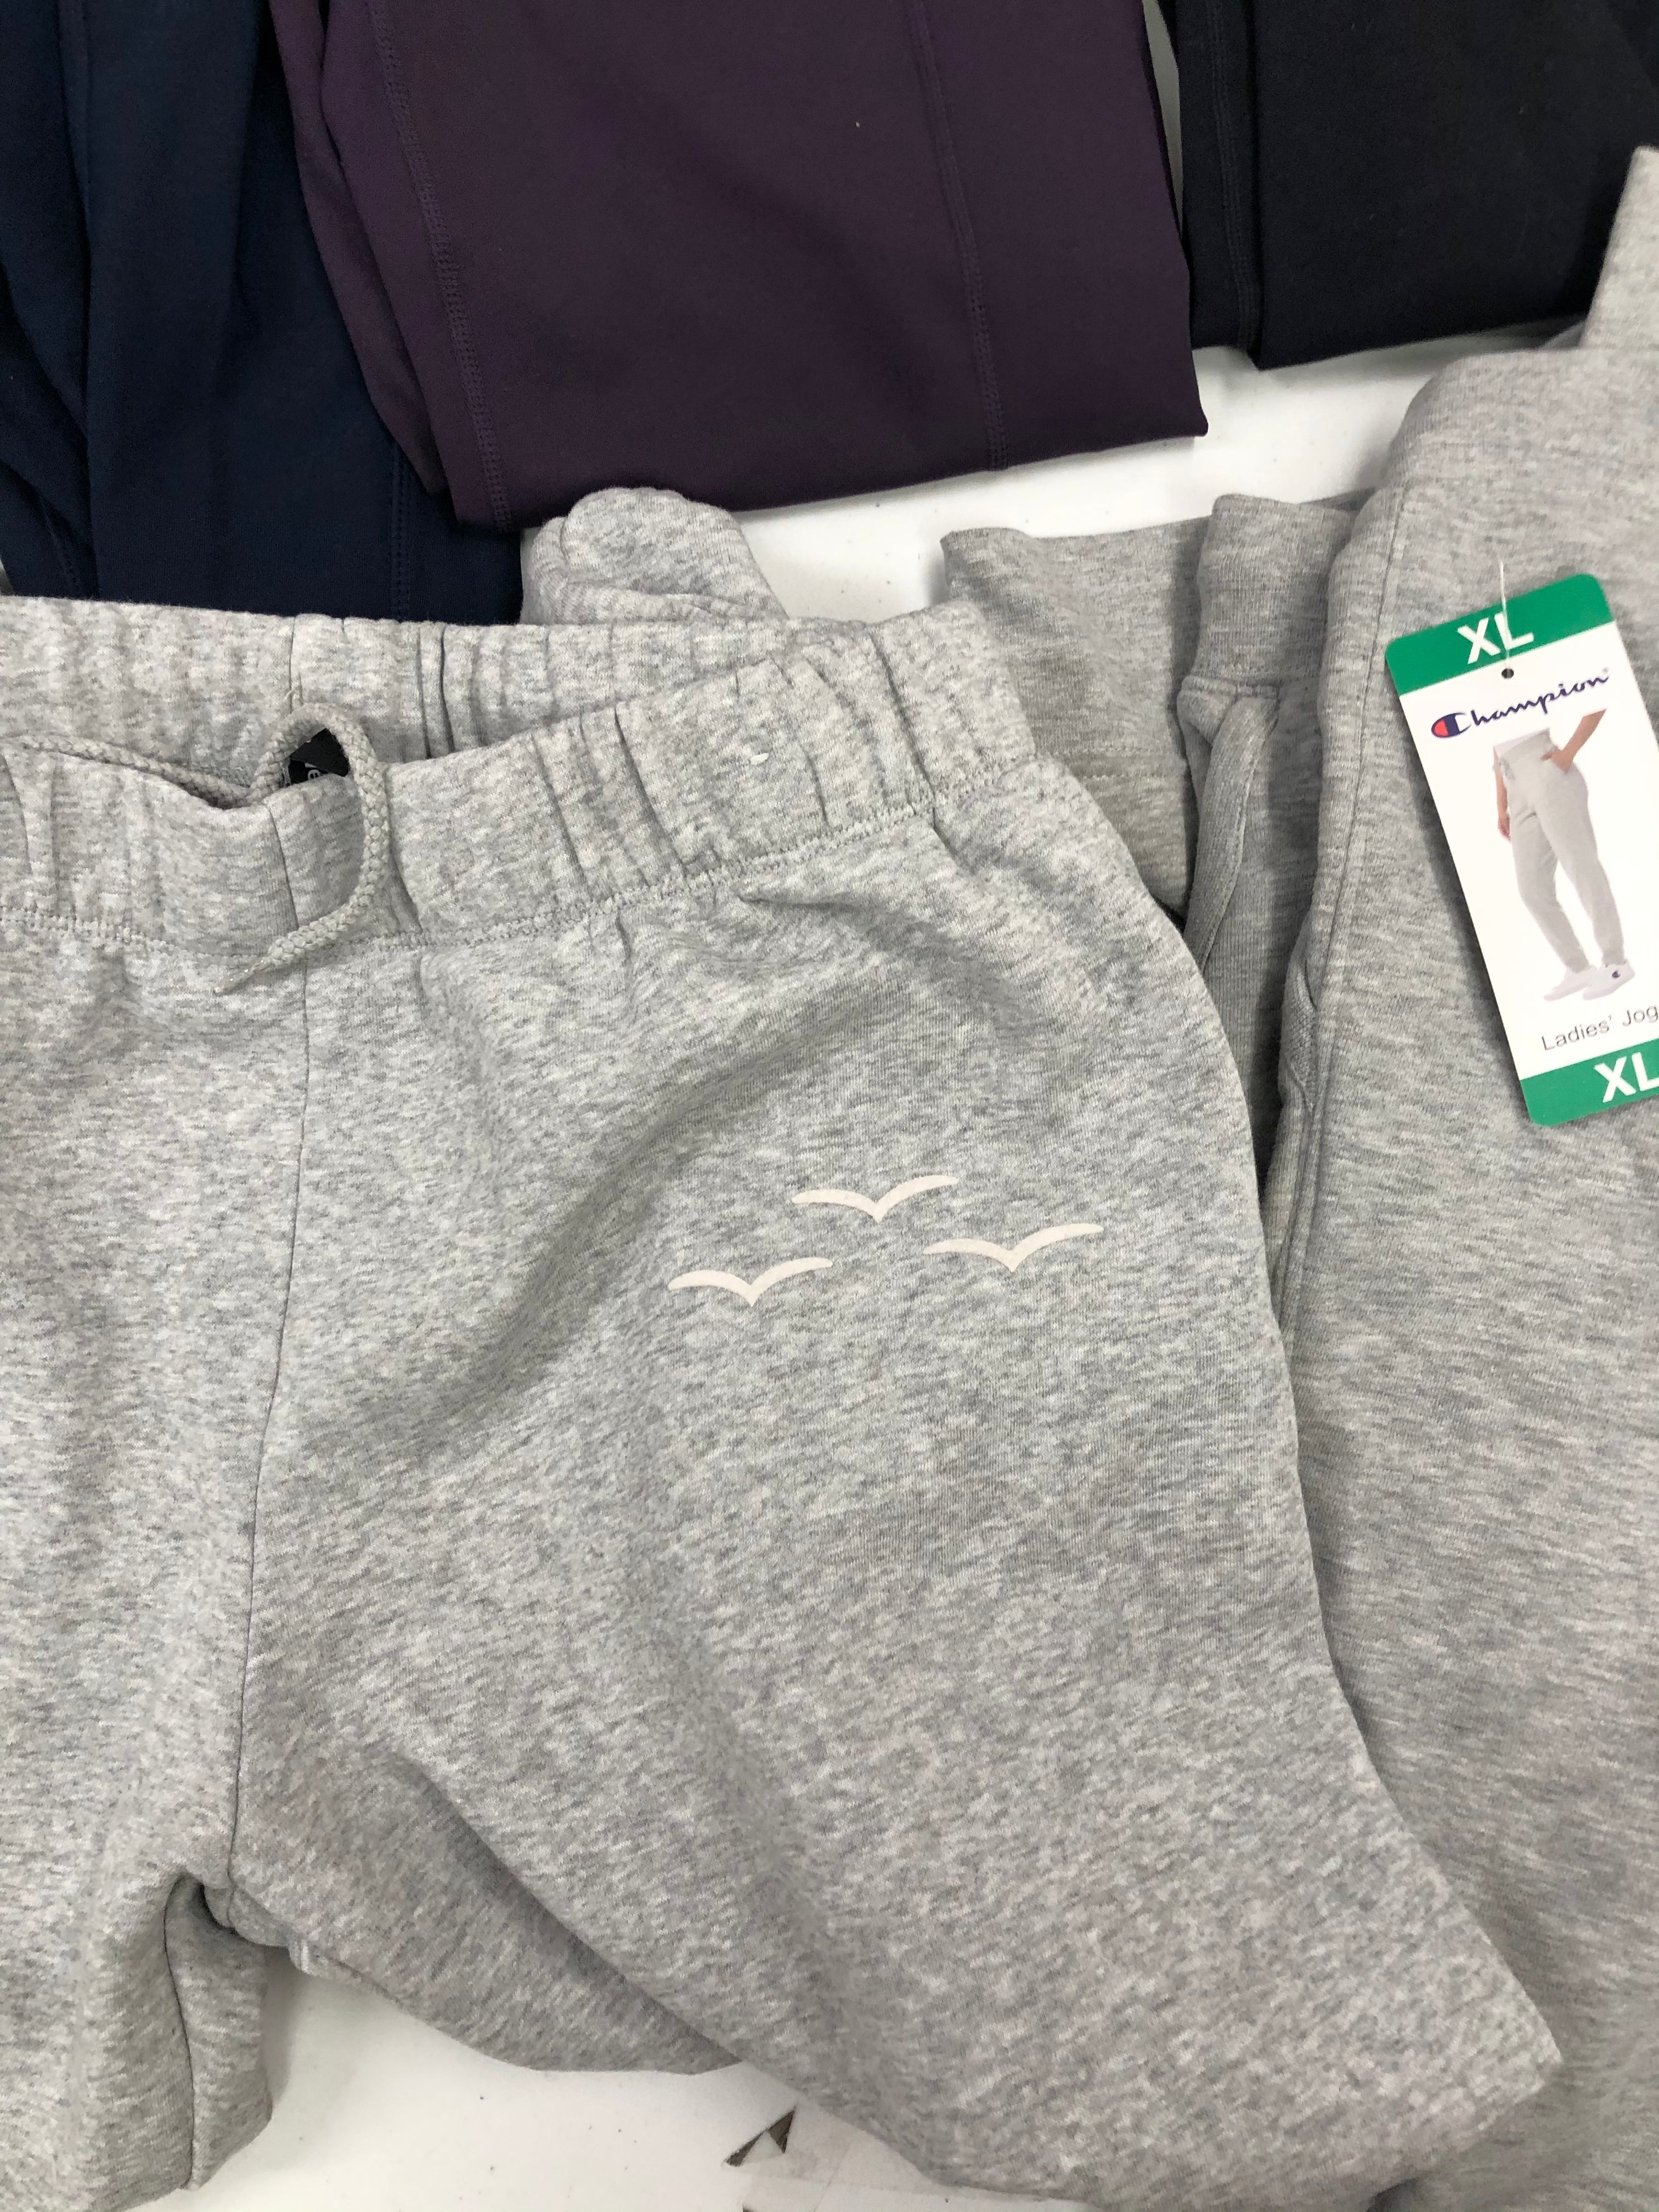 Women's Clothing Sweatpants + Other Workout Bottoms Wholesale Lot, LAZ 